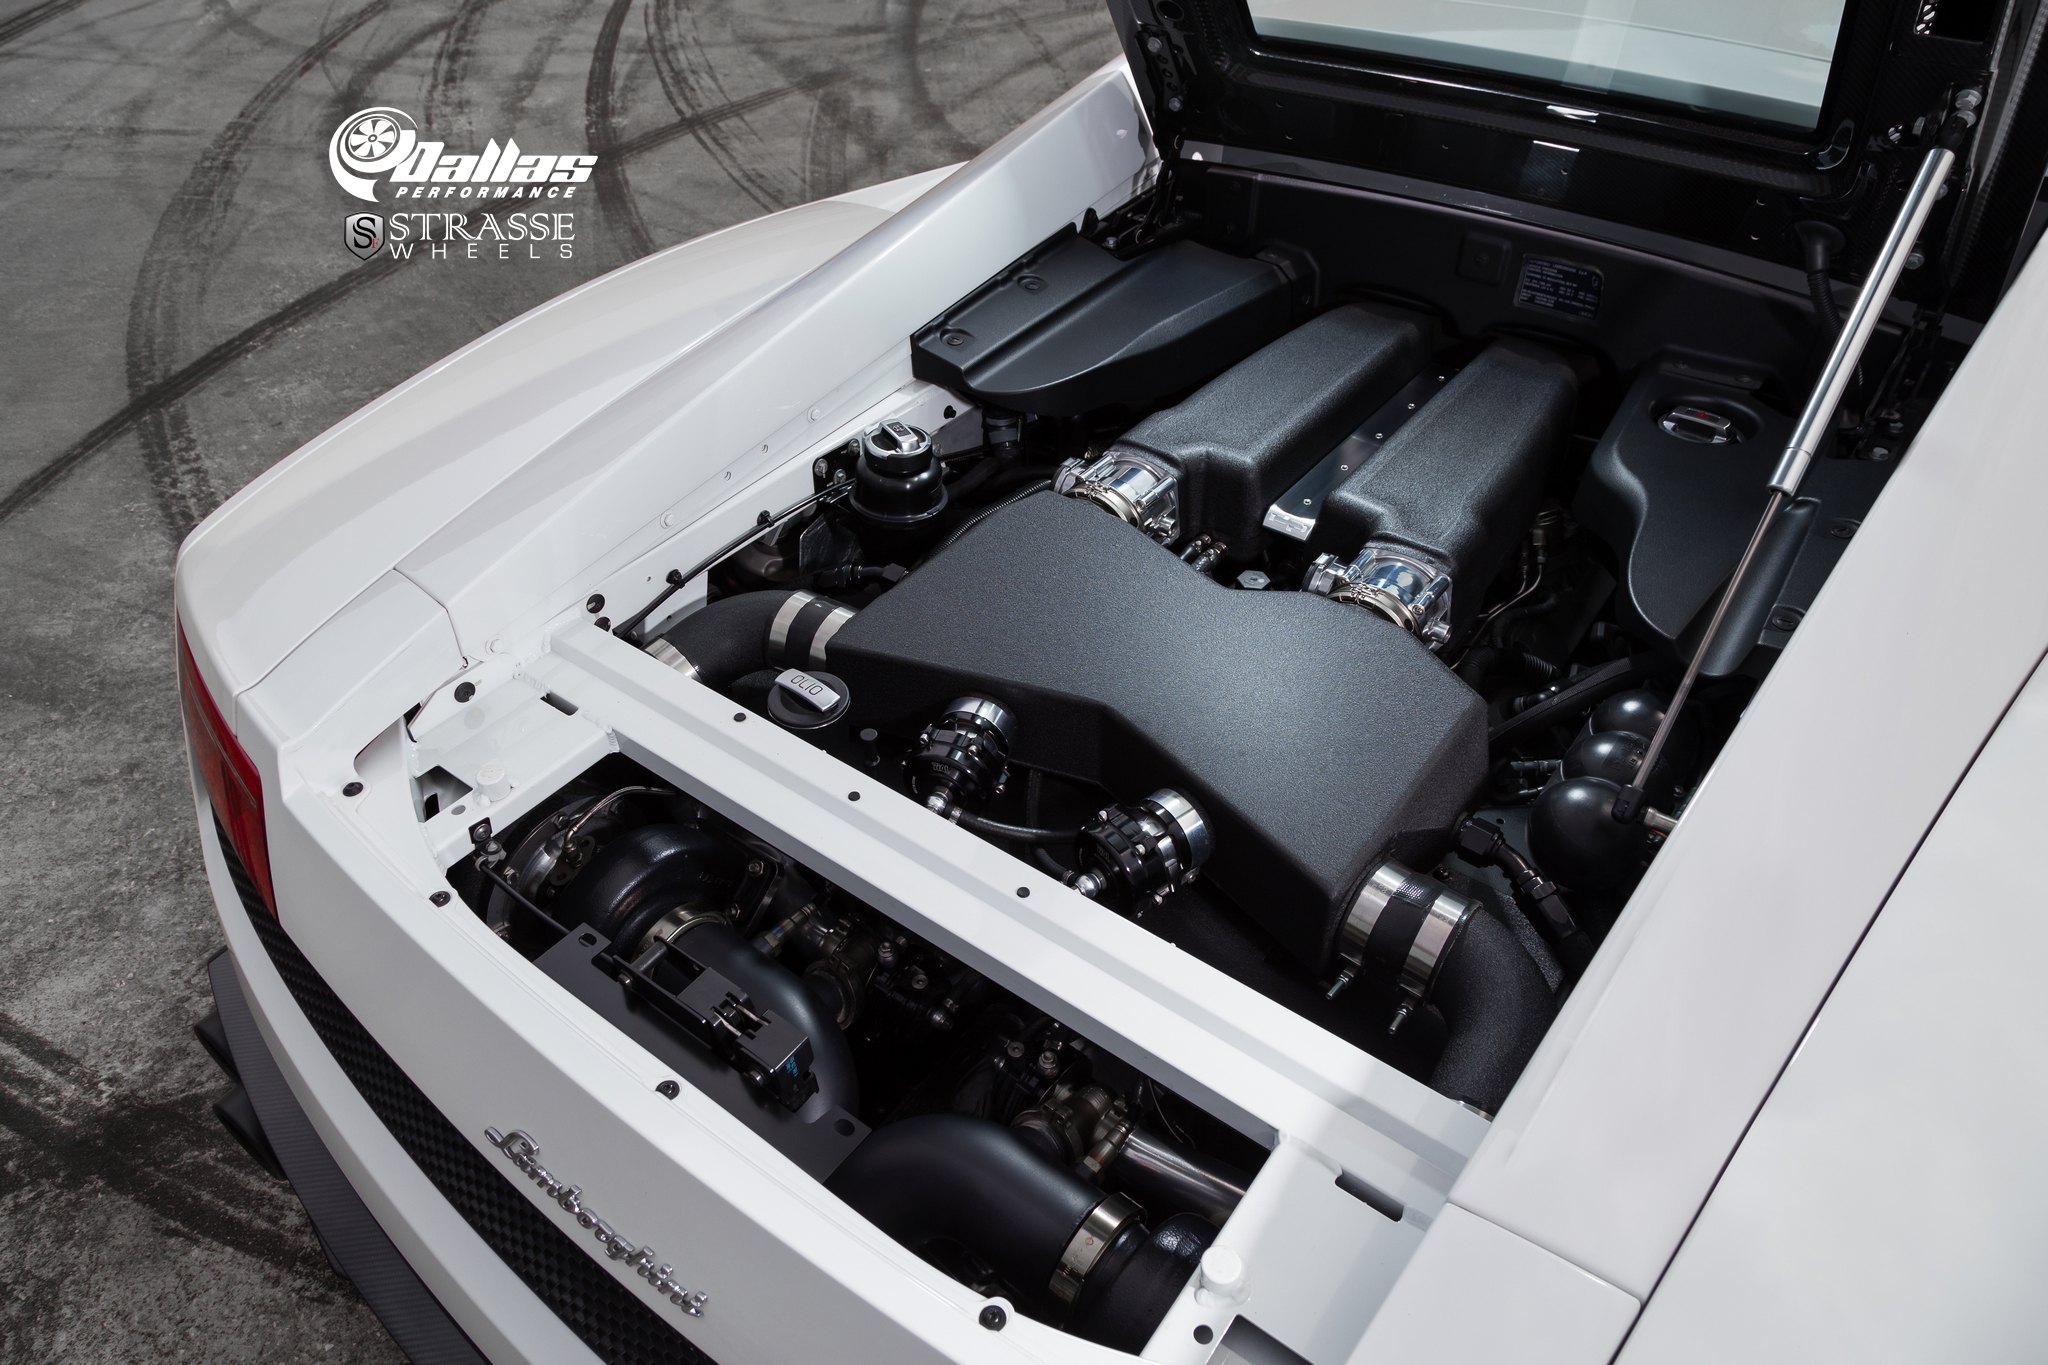 Custom Exhaust System in White Lamborghini Gallardo - Photo by Strasse Forged